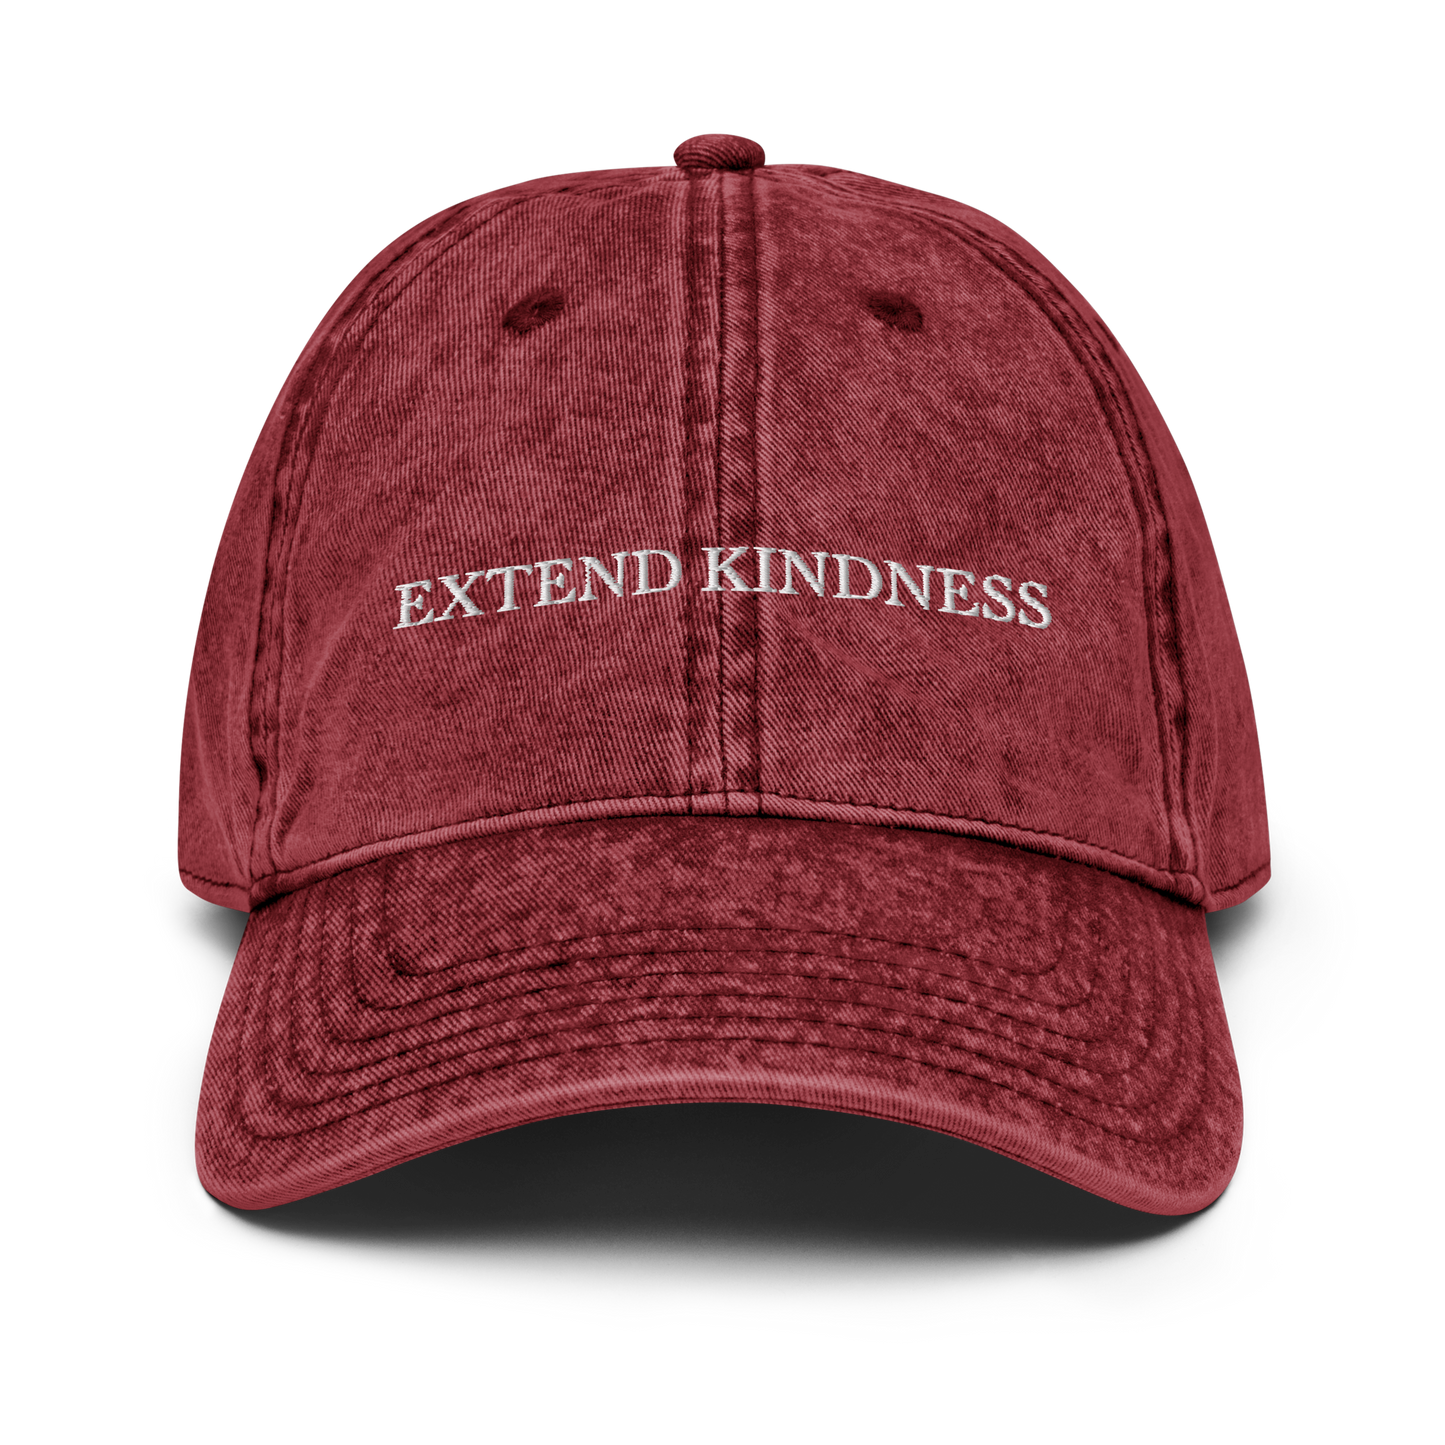 "EXTEND KINDNESS" Embroidered Vintage Cap